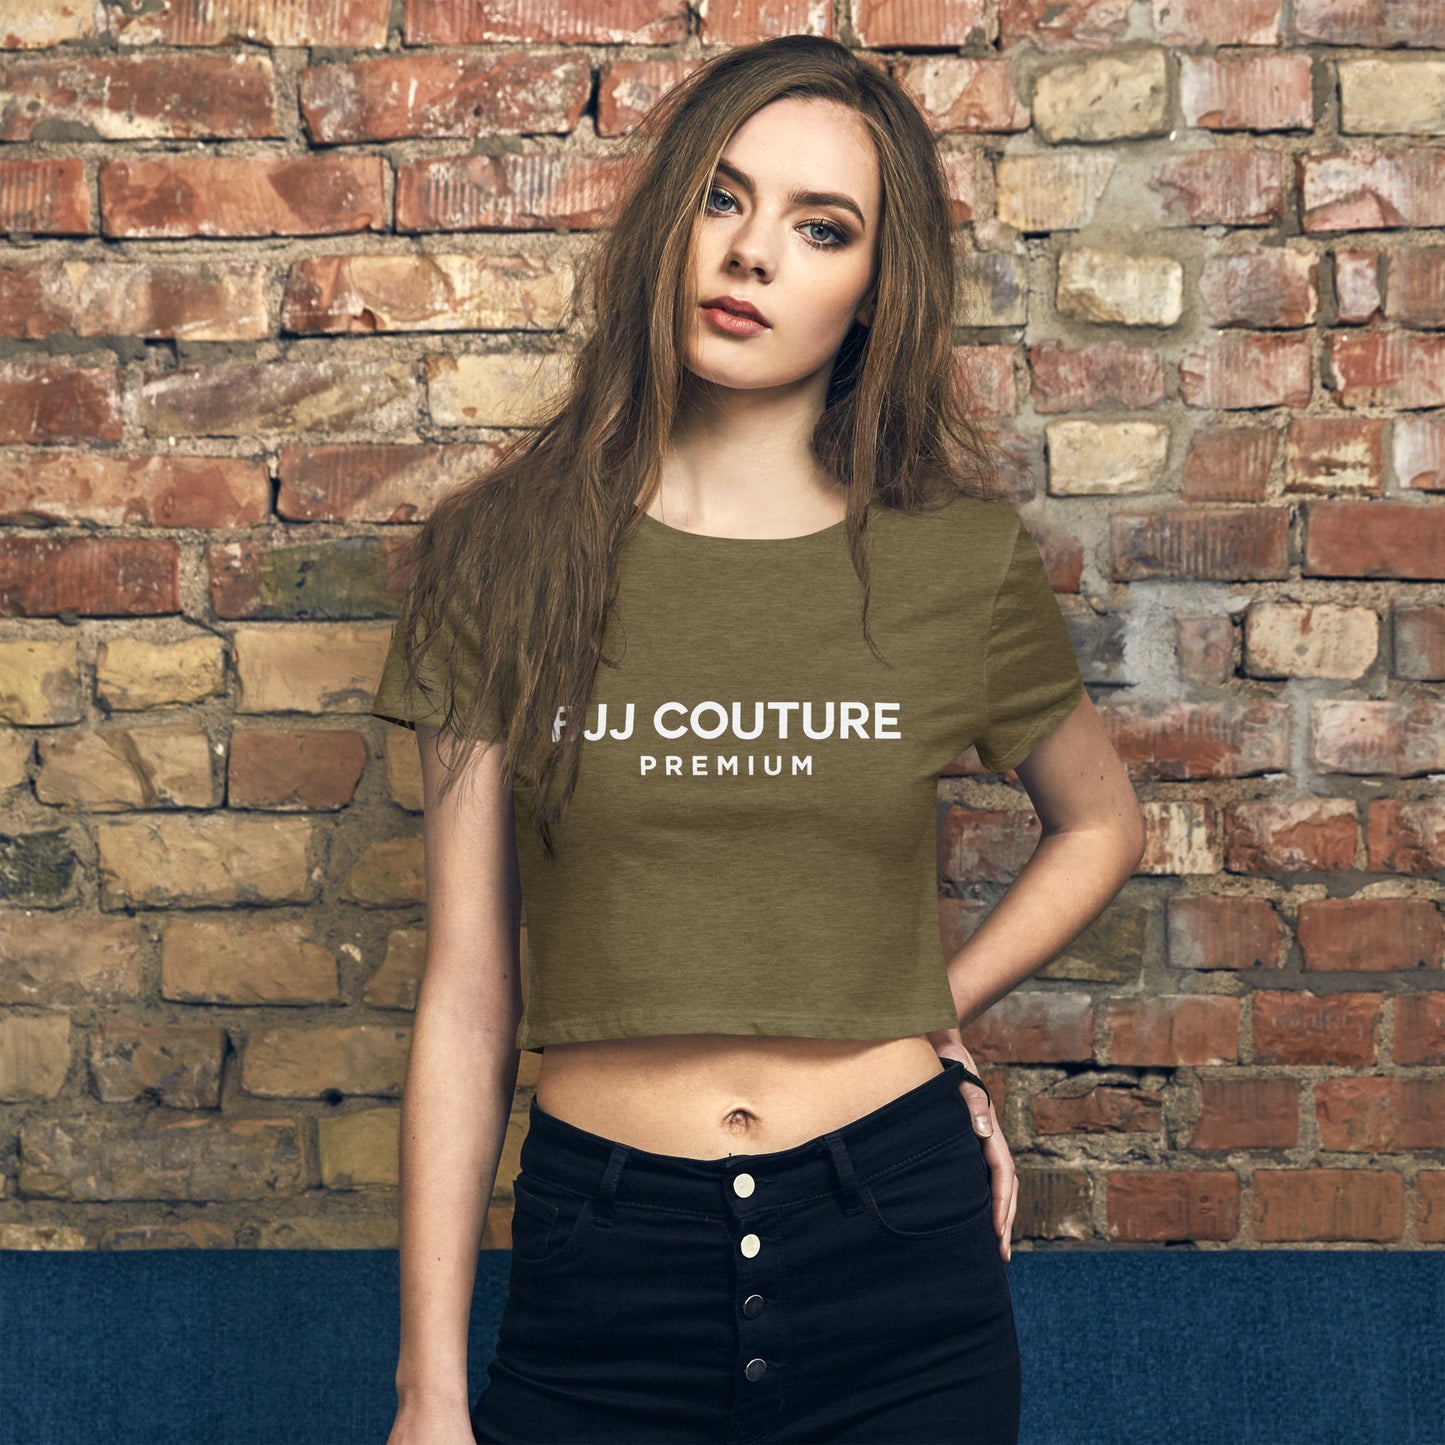 BJJ Couture Premium Women’s Crop Tee